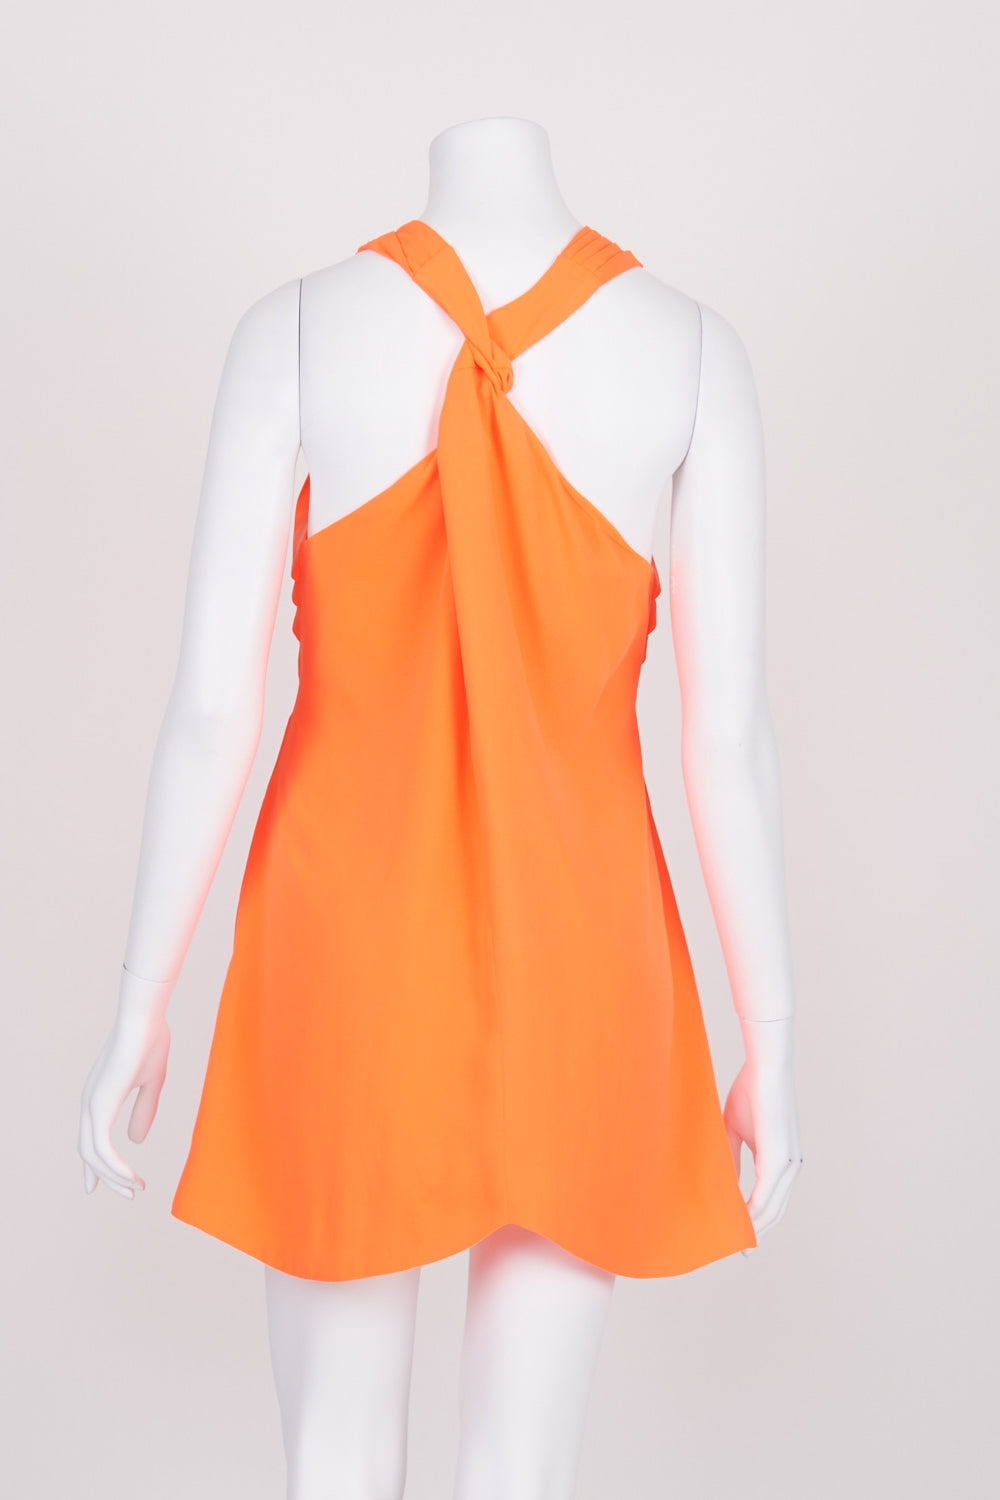 Cameo Orange Sleeveless Dress XS